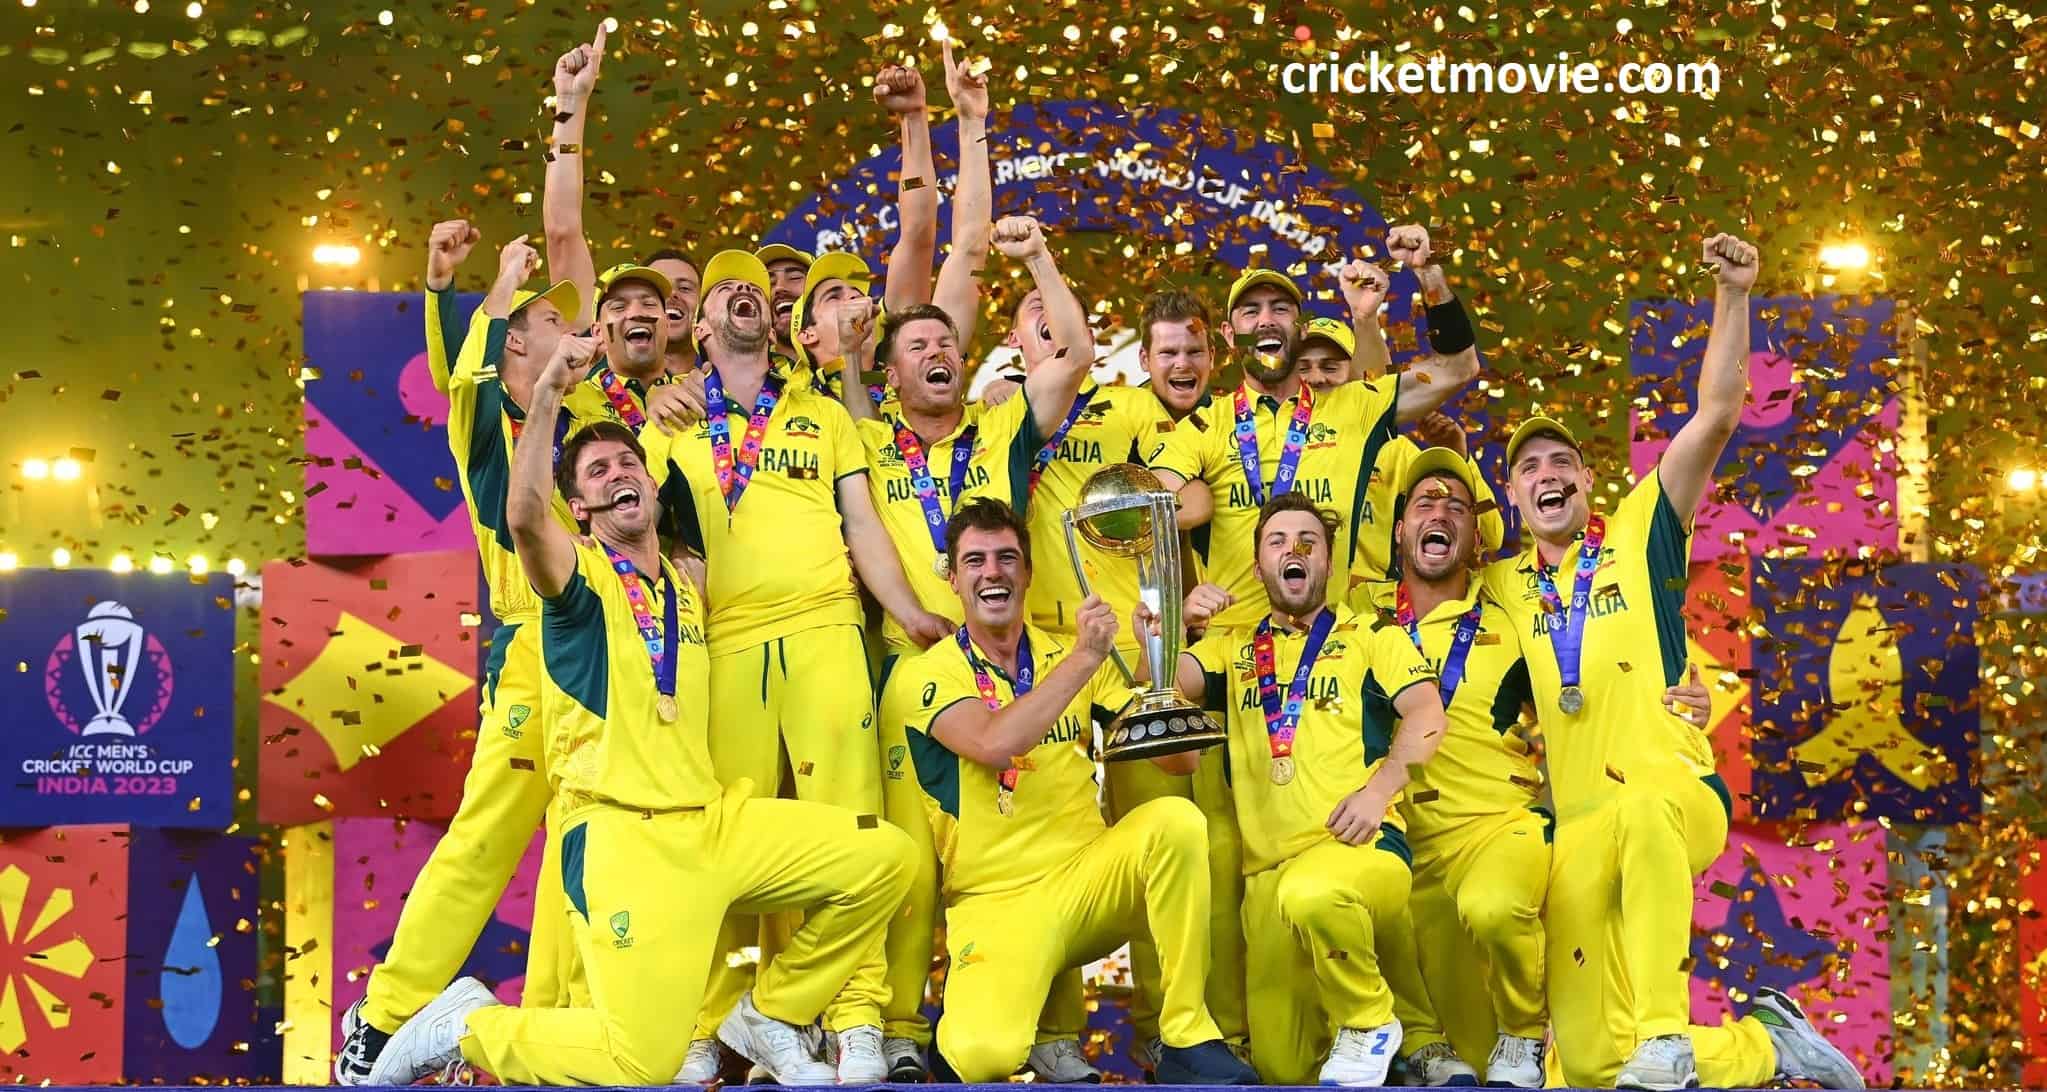 Australia won CWC23-cricketmovie.com